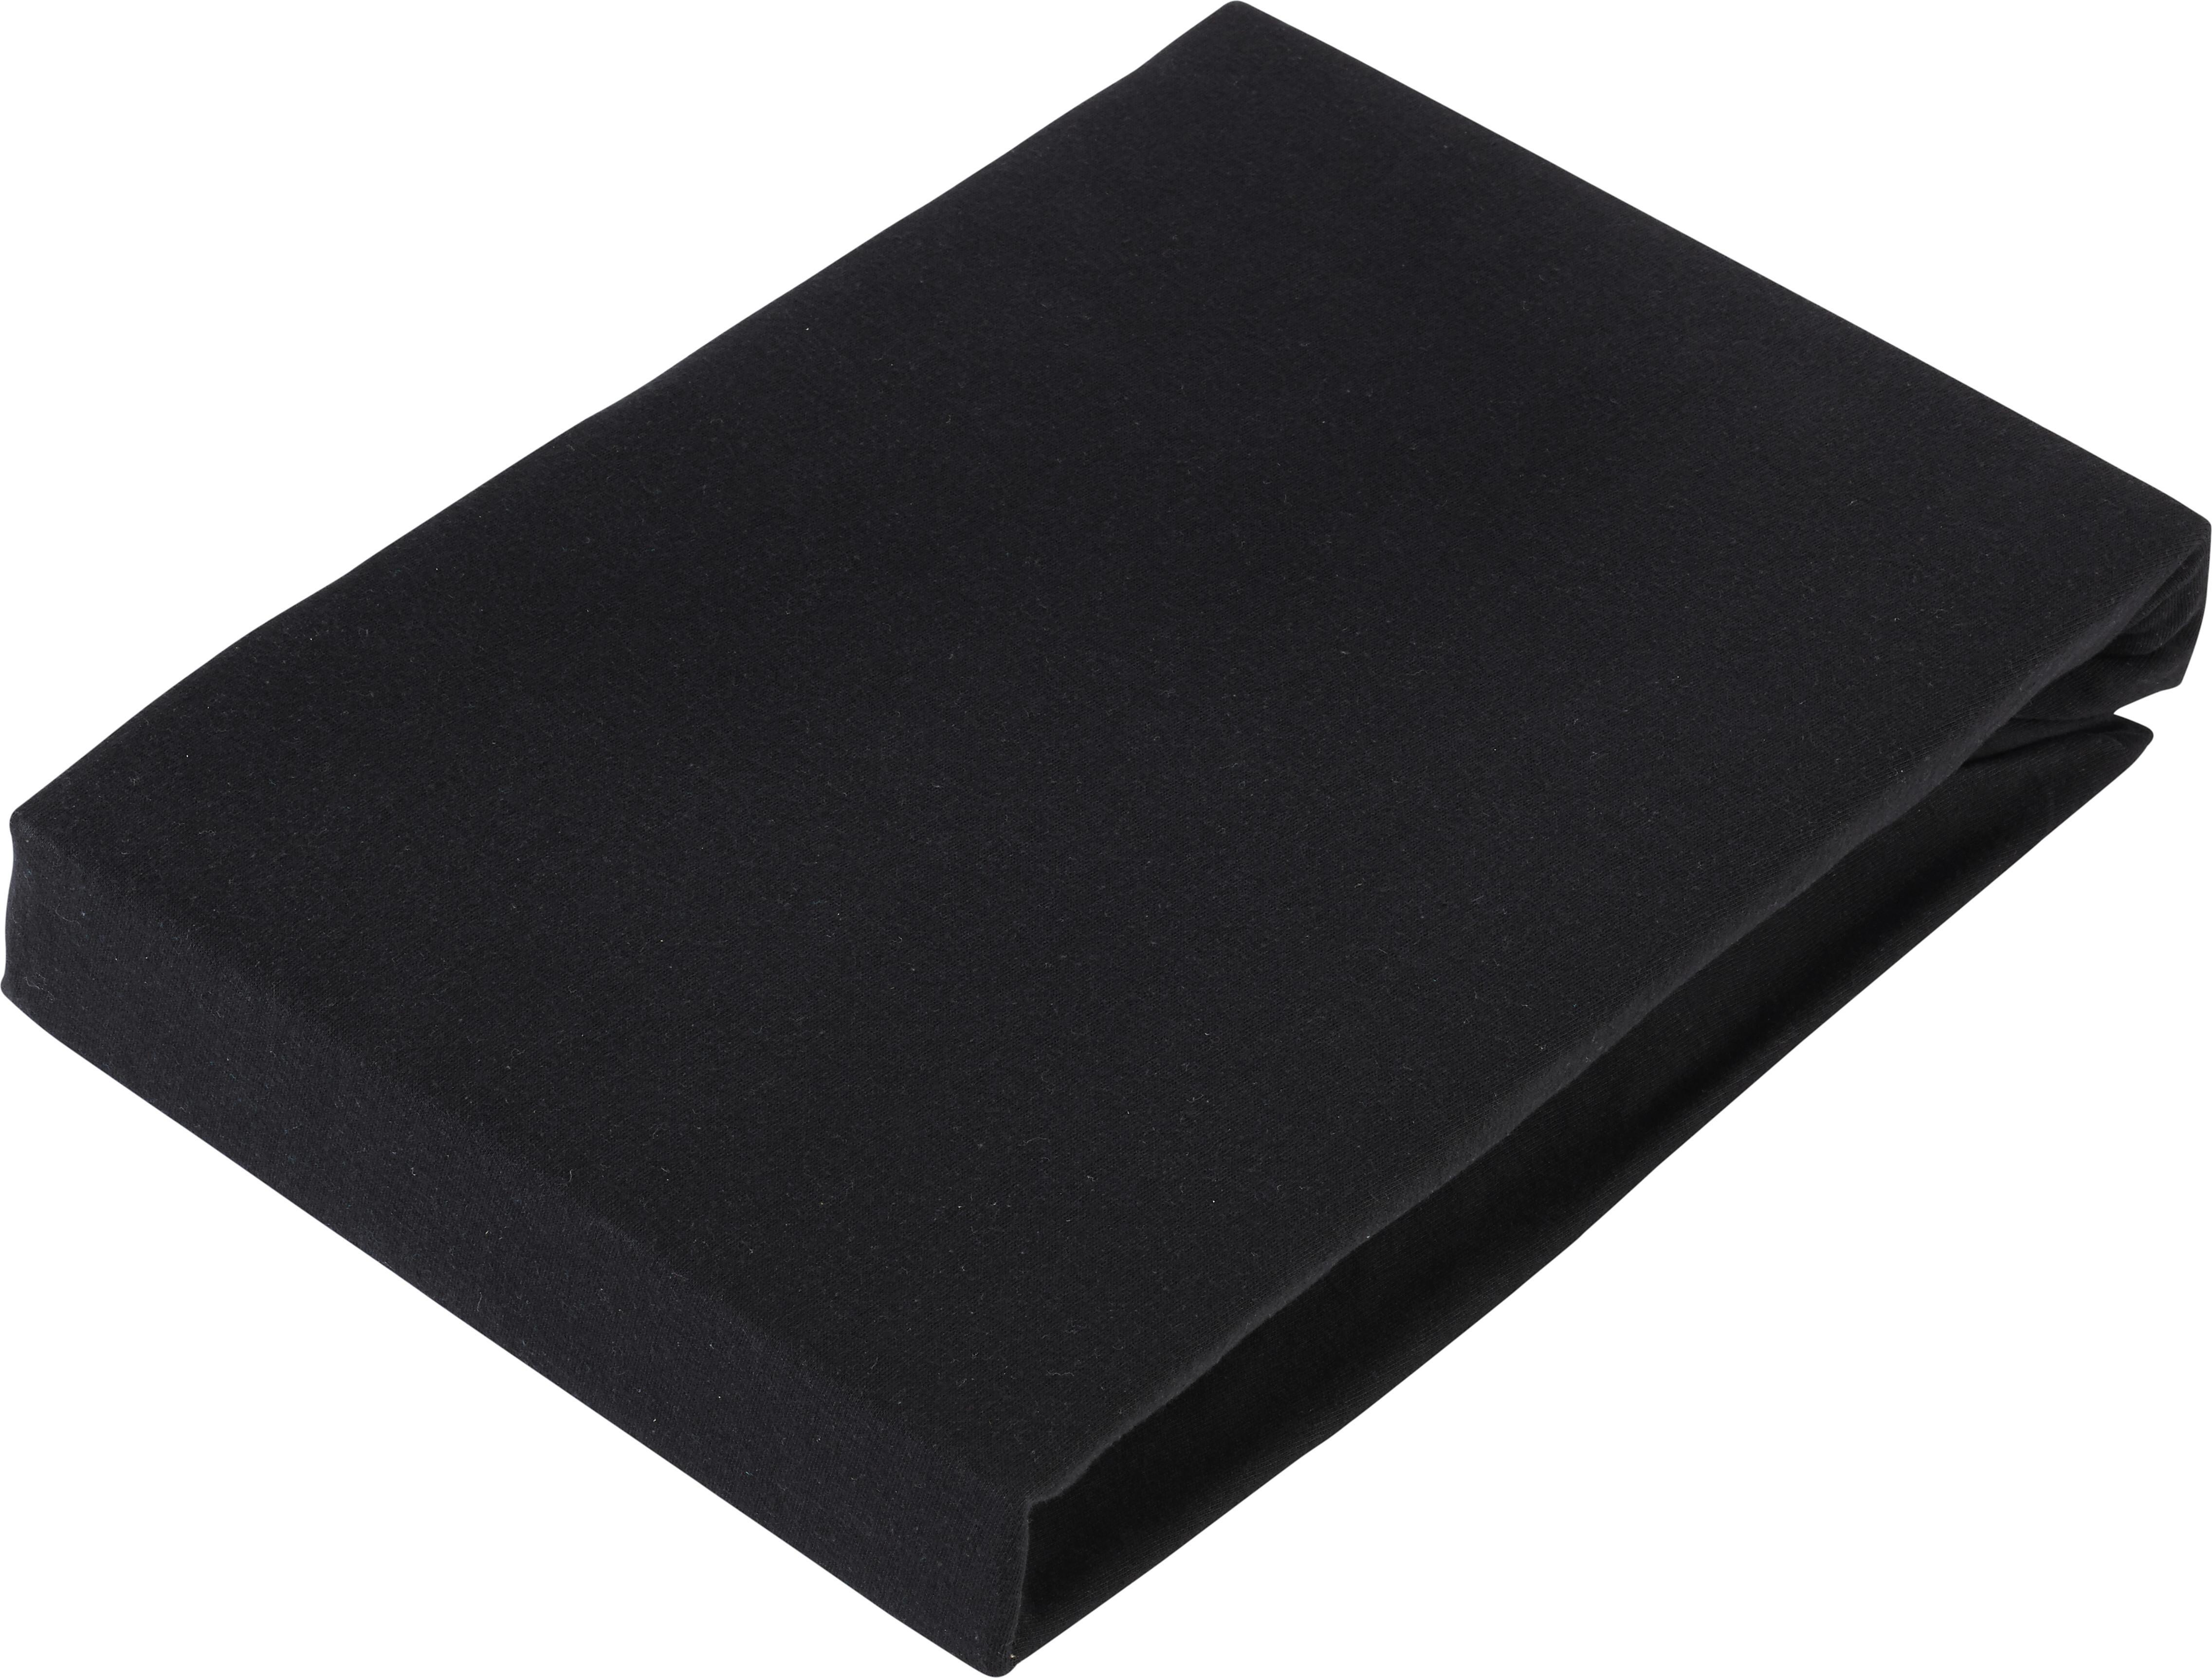 Napenjalna Rjuha Basic - črna, tekstil (180/200cm) - Modern Living